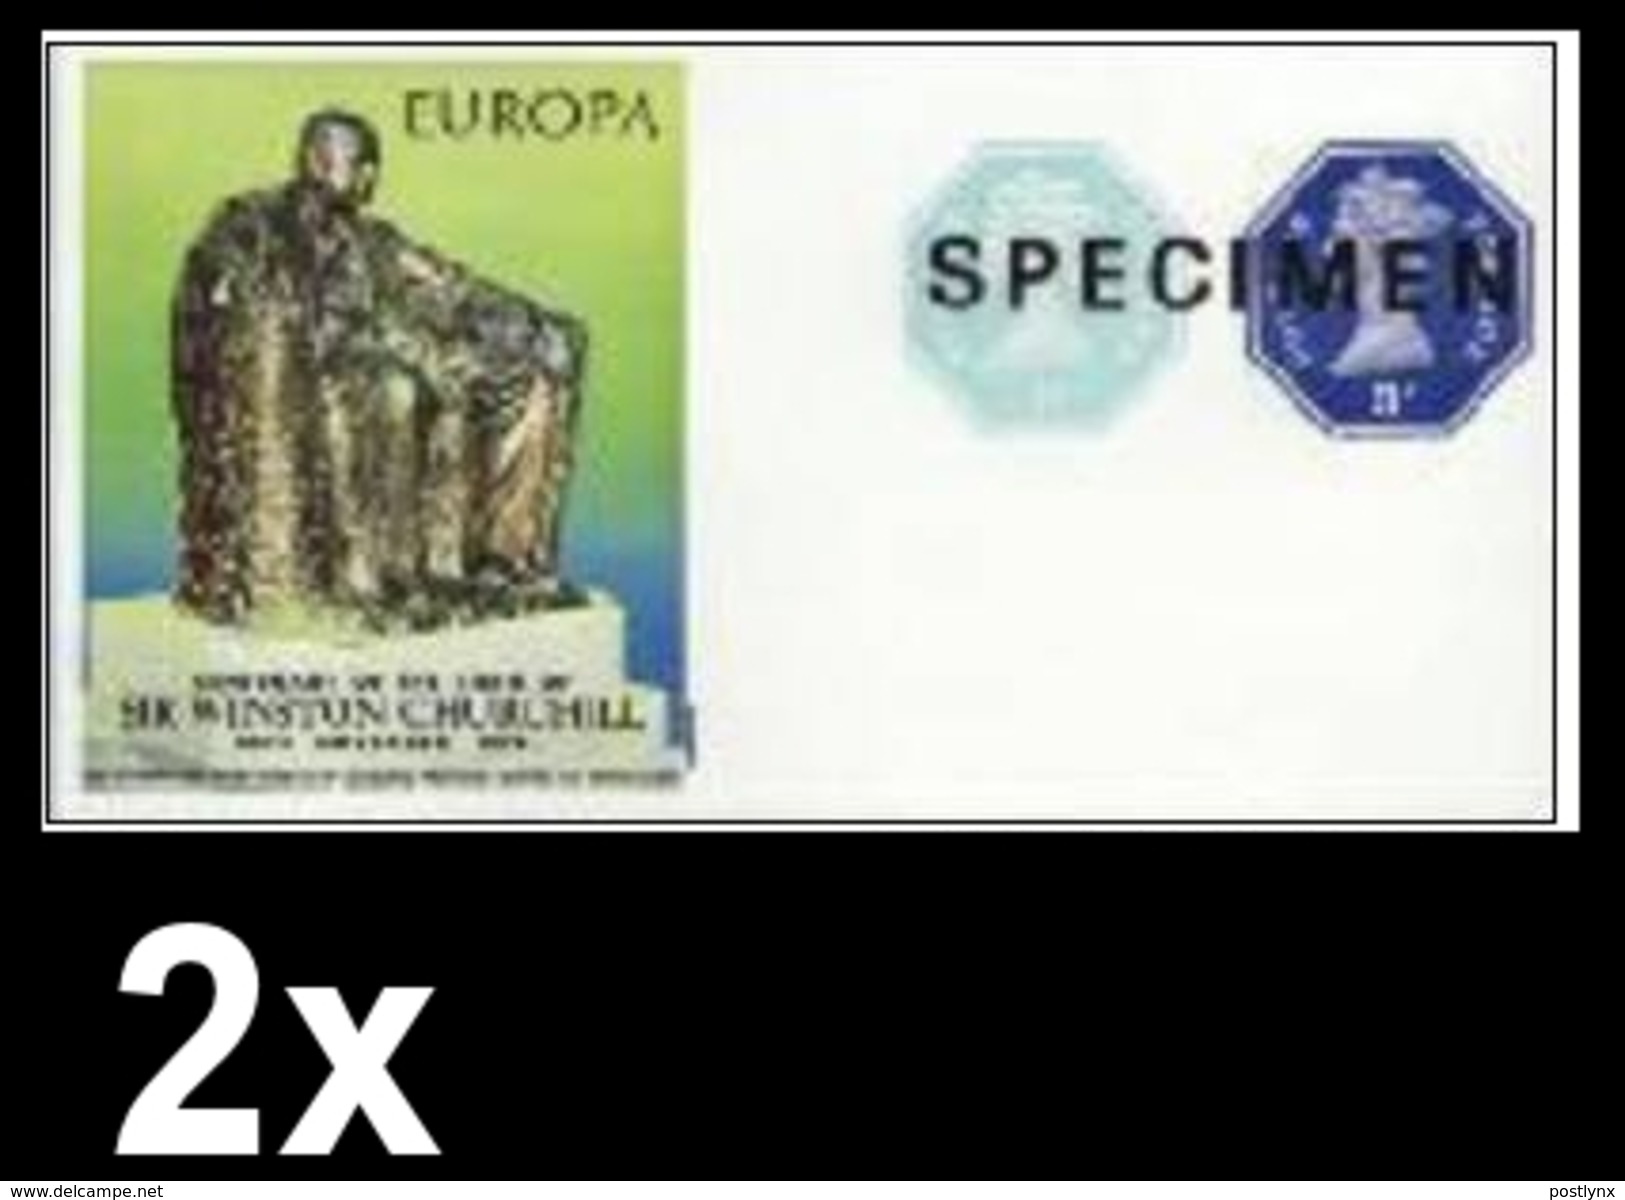 BULK:2 X GREAT BRITAIN 1974 Monument EUROPA Churchill Machines  SPECIMEN IMPERF:sheetlet [muestra,Muster,spécimen] - Imperforated